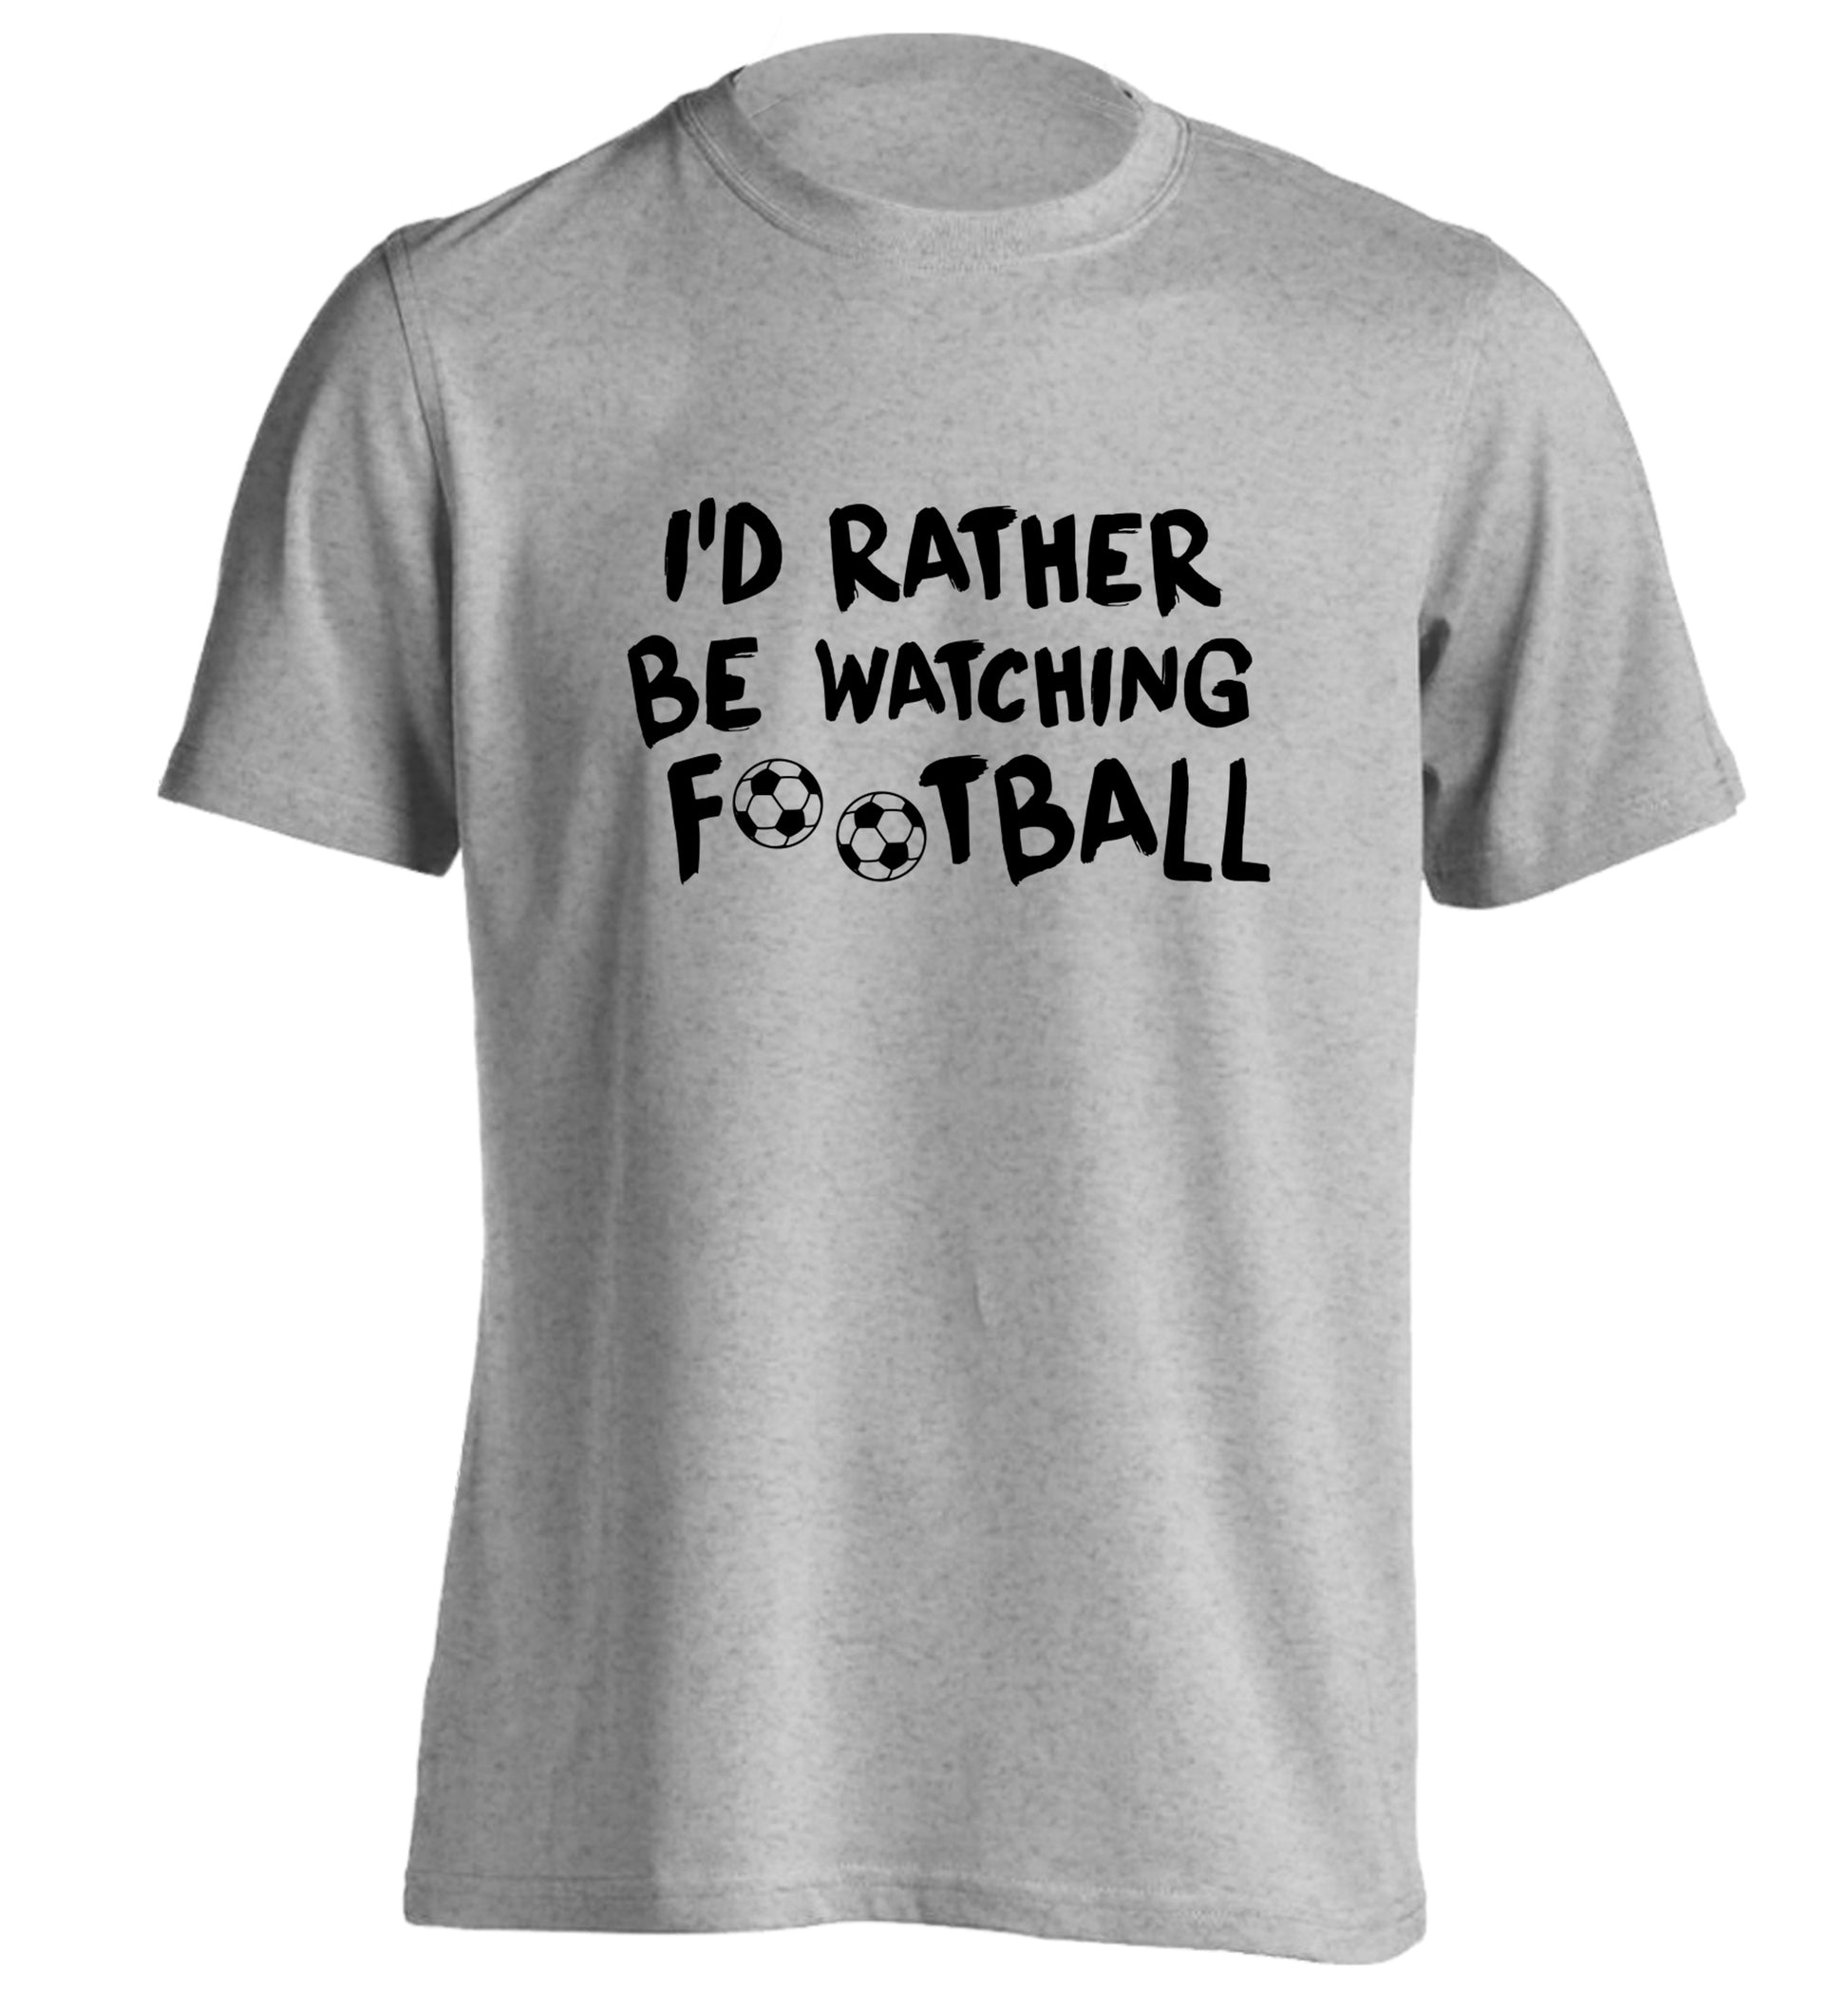 I'd rather be watching football adults unisexgrey Tshirt 2XL